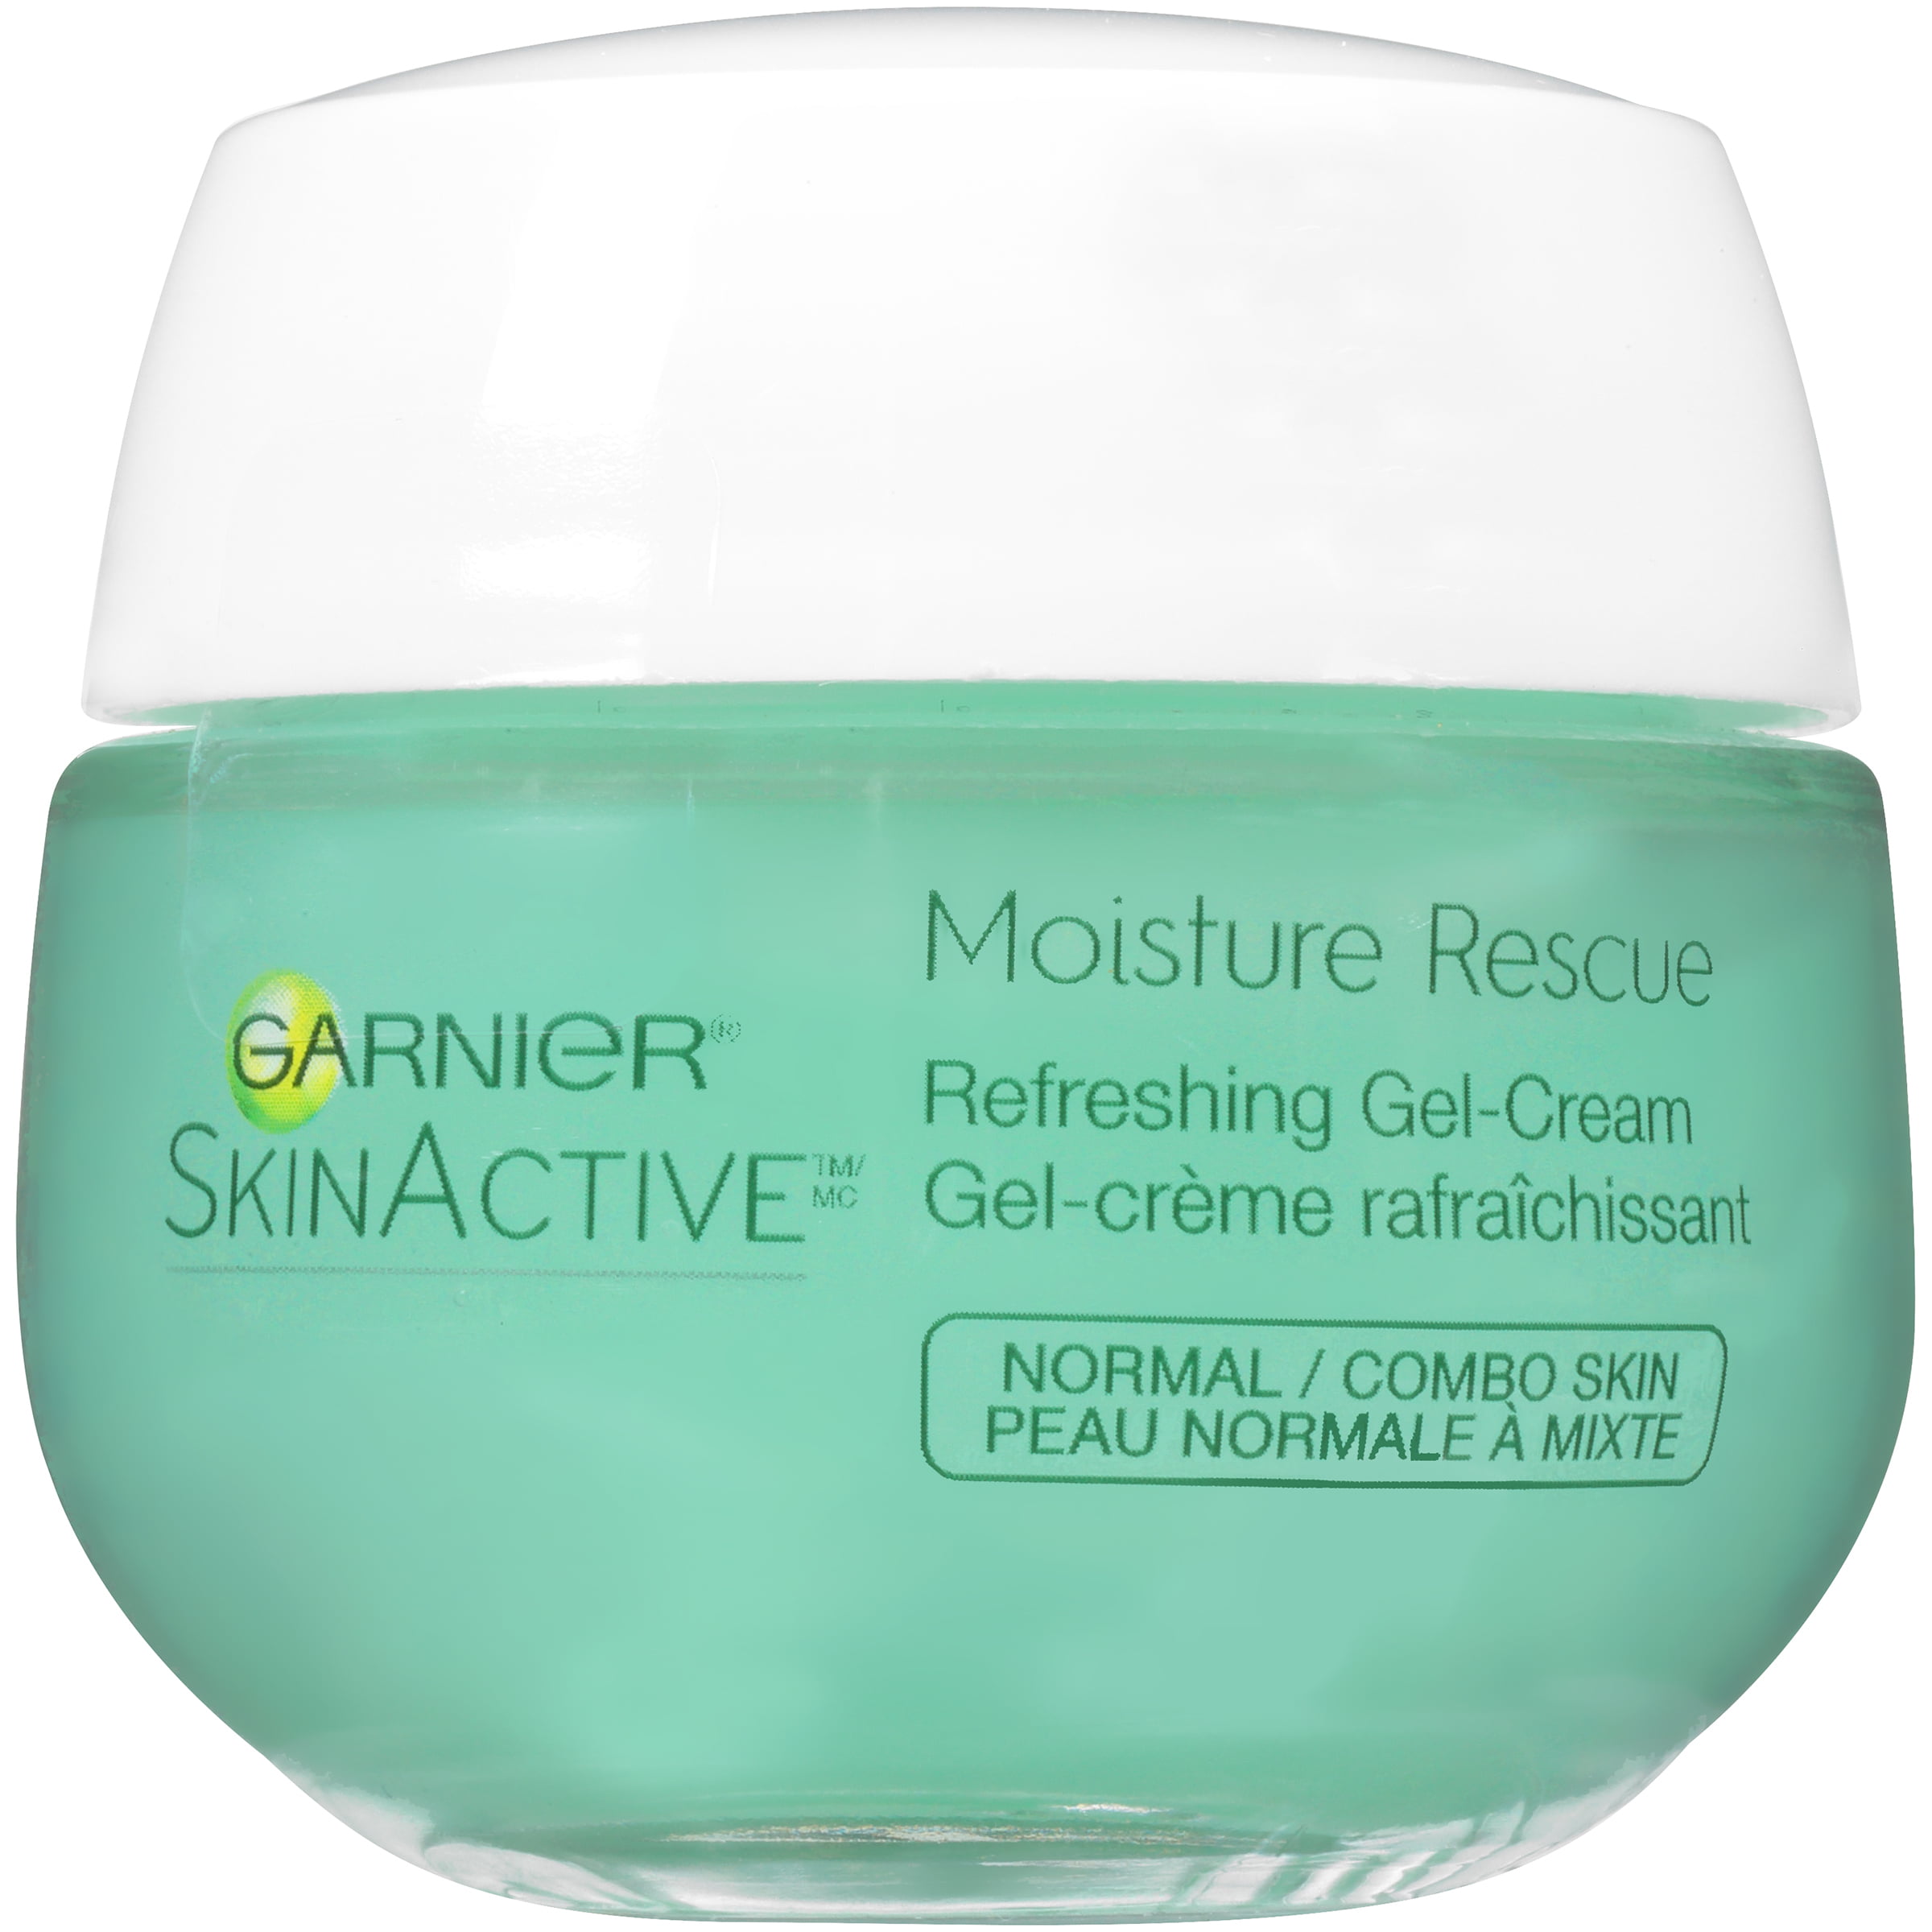 Garnier SkinActive Moisture Rescue Refreshing Gel Cream Normal and Combo Skin, 1.7 oz - image 1 of 8